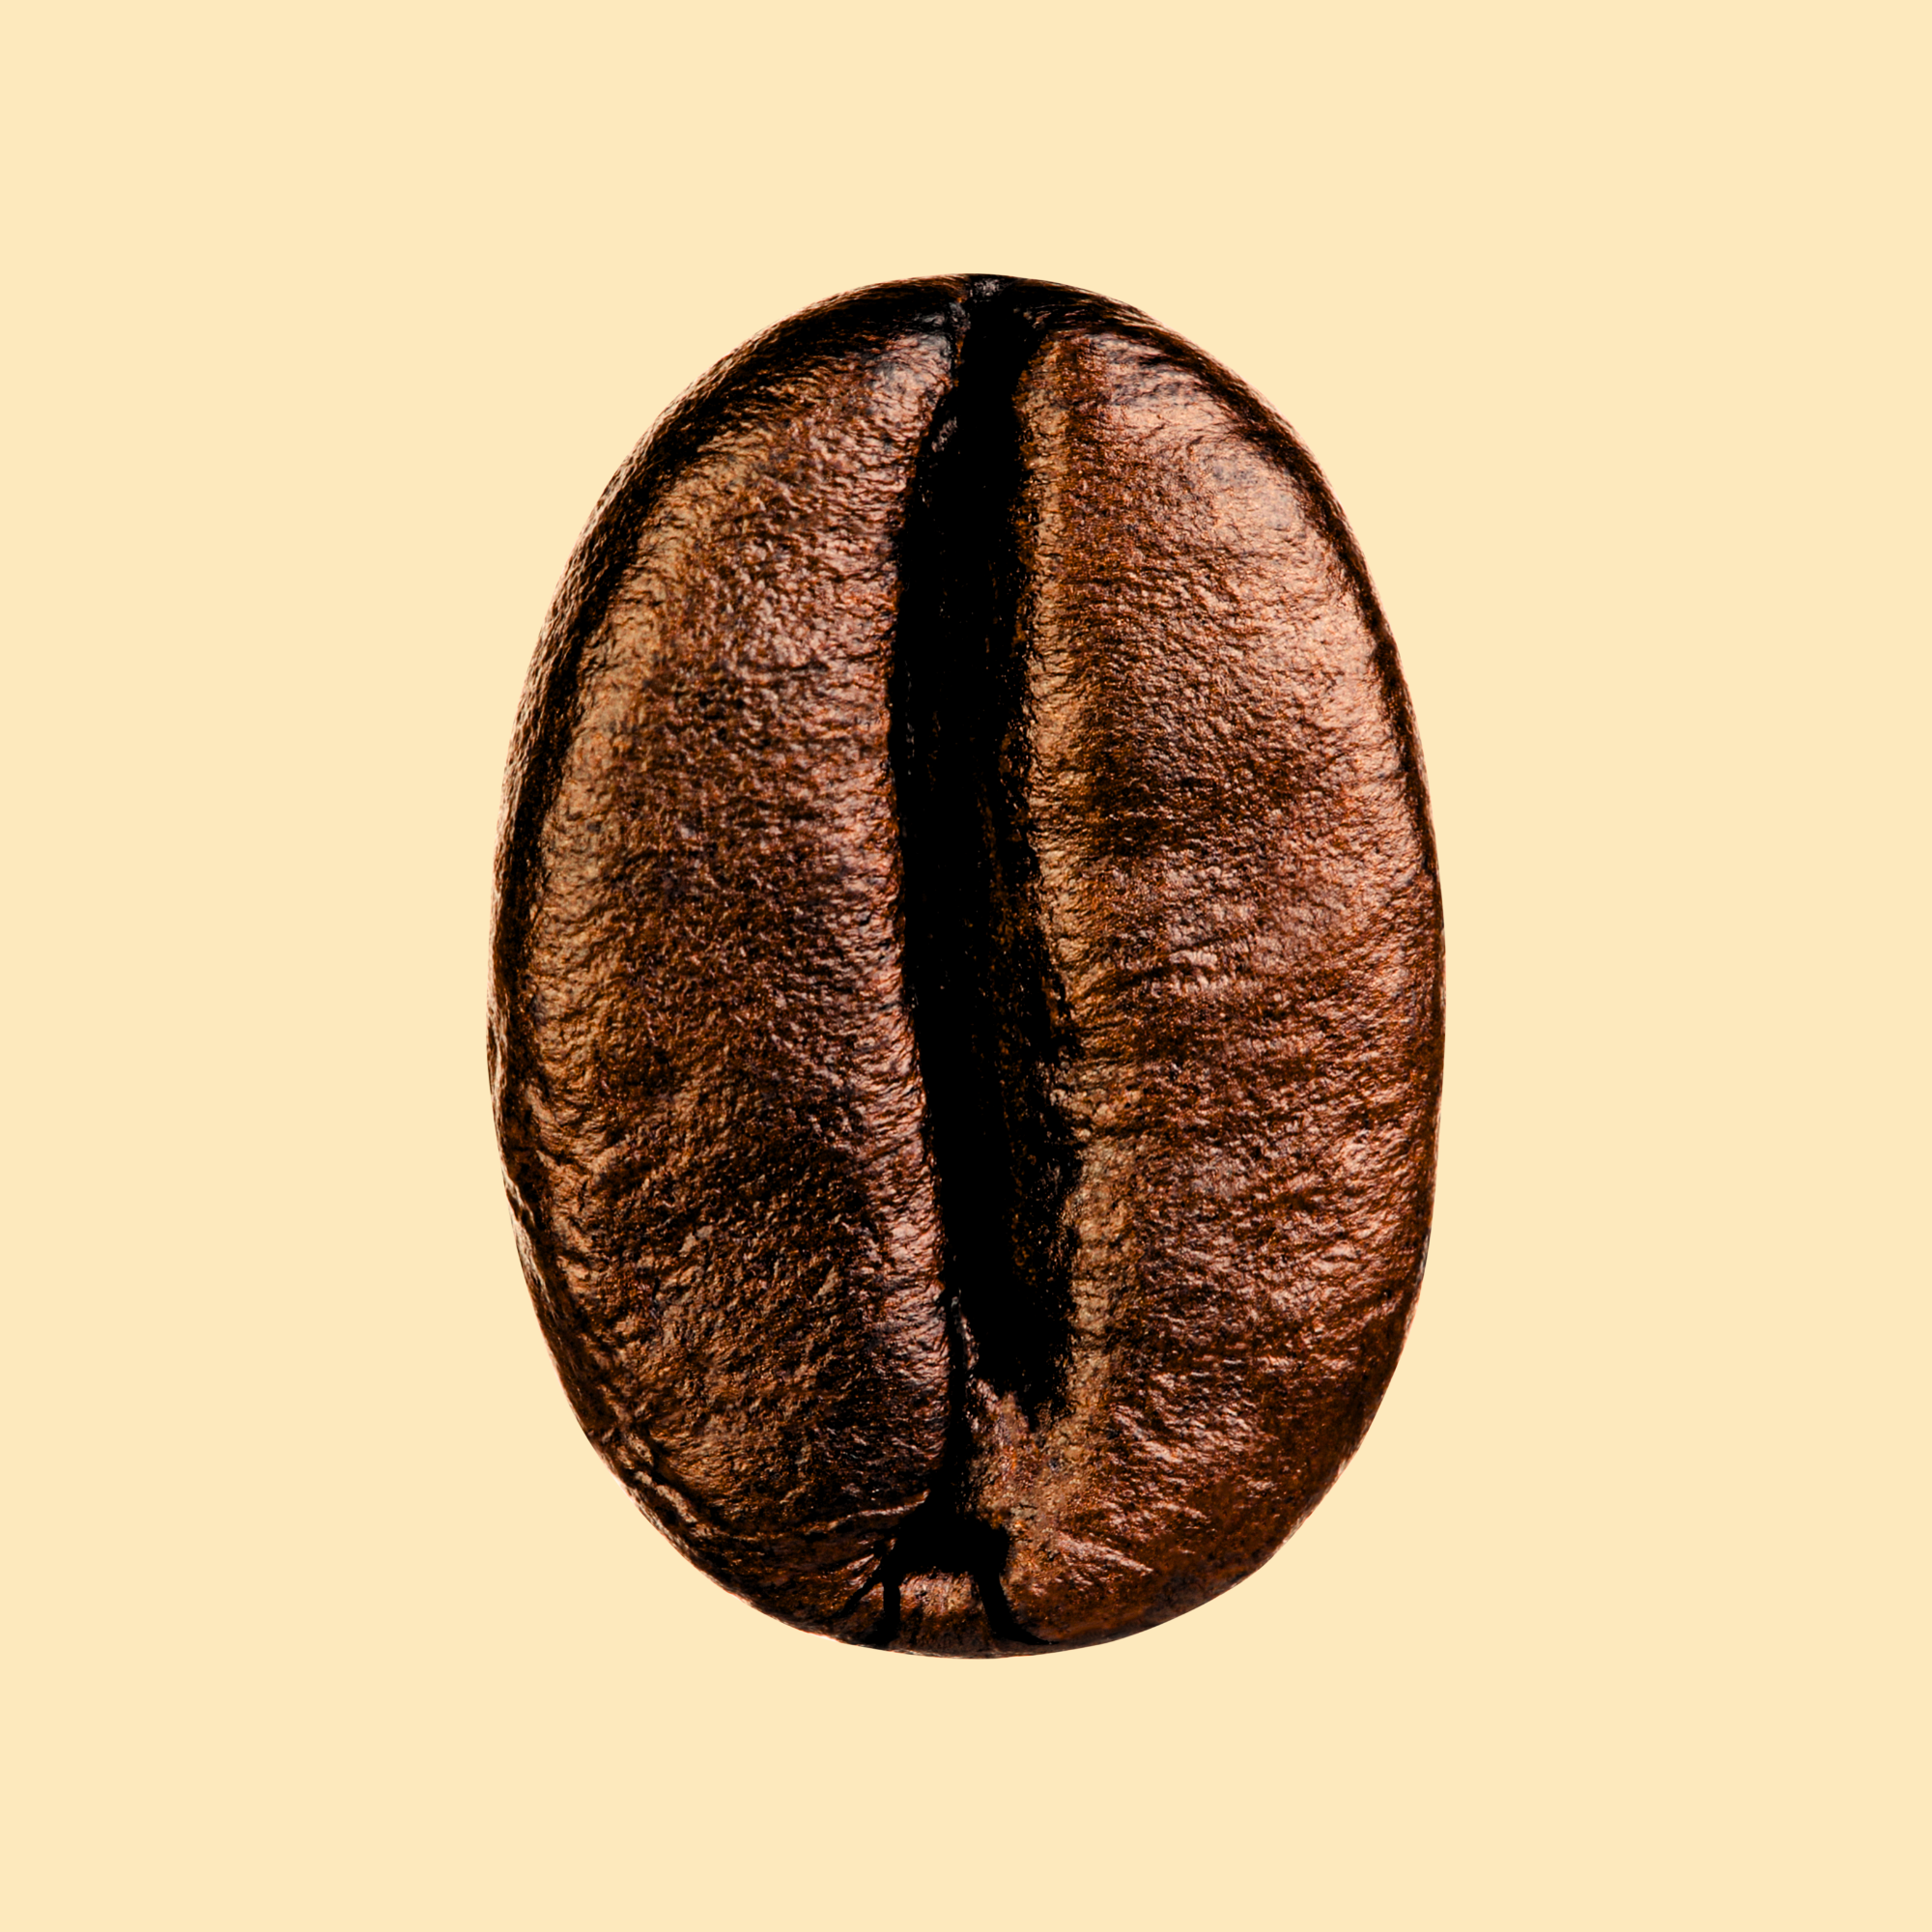 GAIA COFFEE